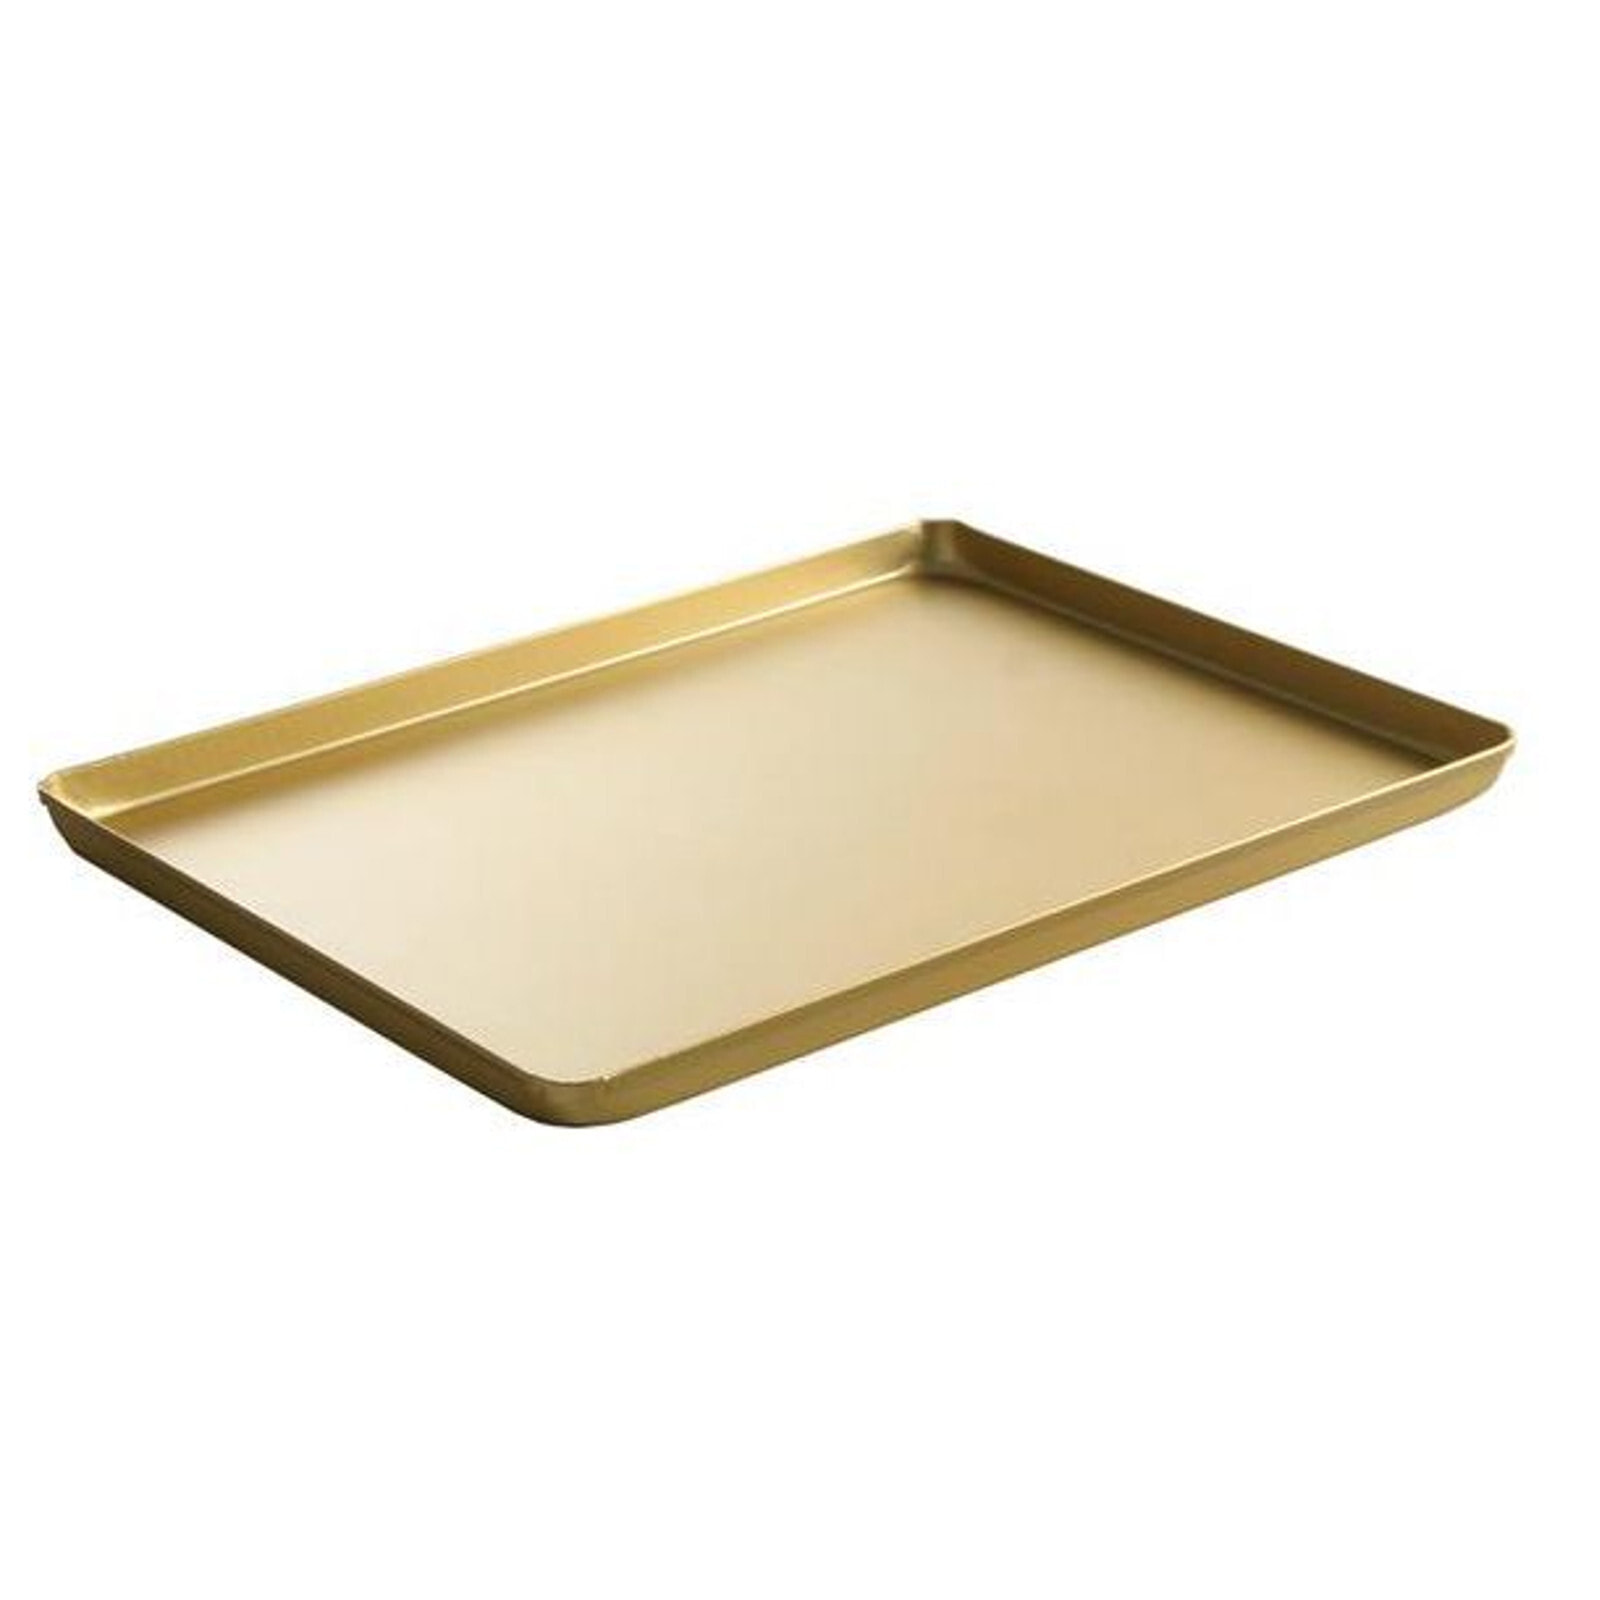 Display baking bakery tray made of aluminum 400x300x20mm gold - Hendi 808566